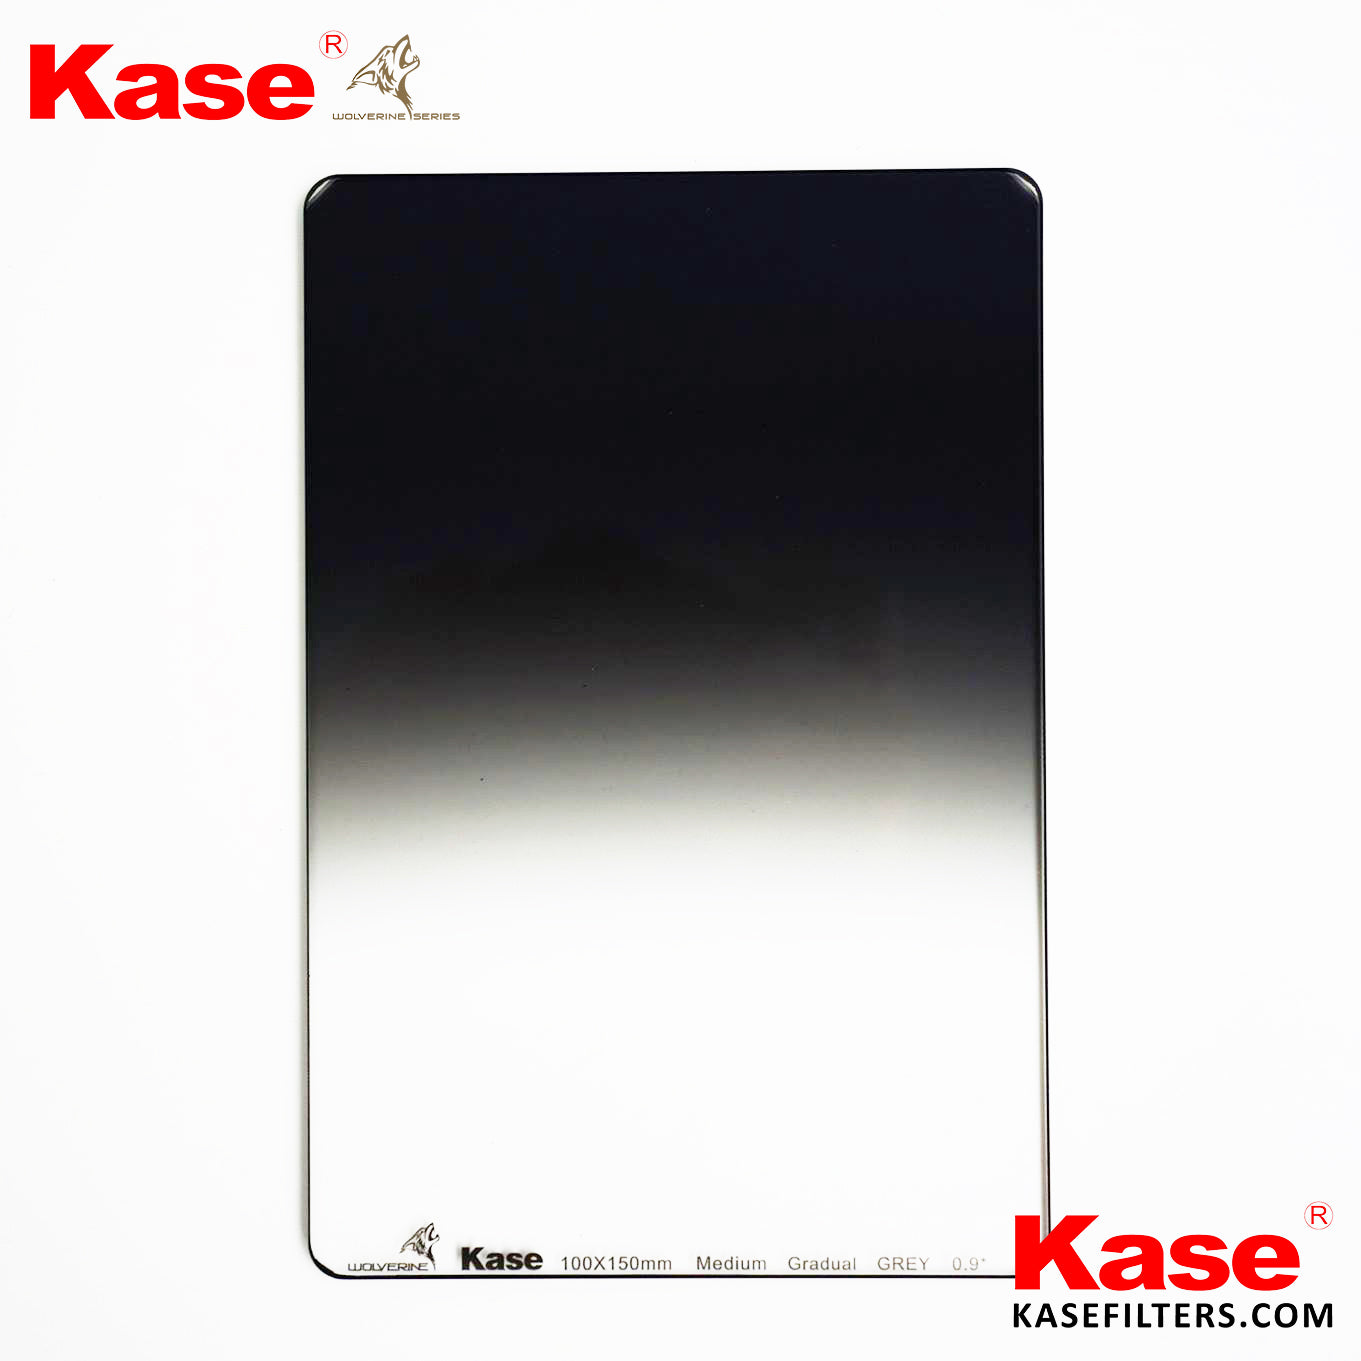 Product Image of Kase Wolverine 100mm Medium GND 0.6 filter (2 stops)